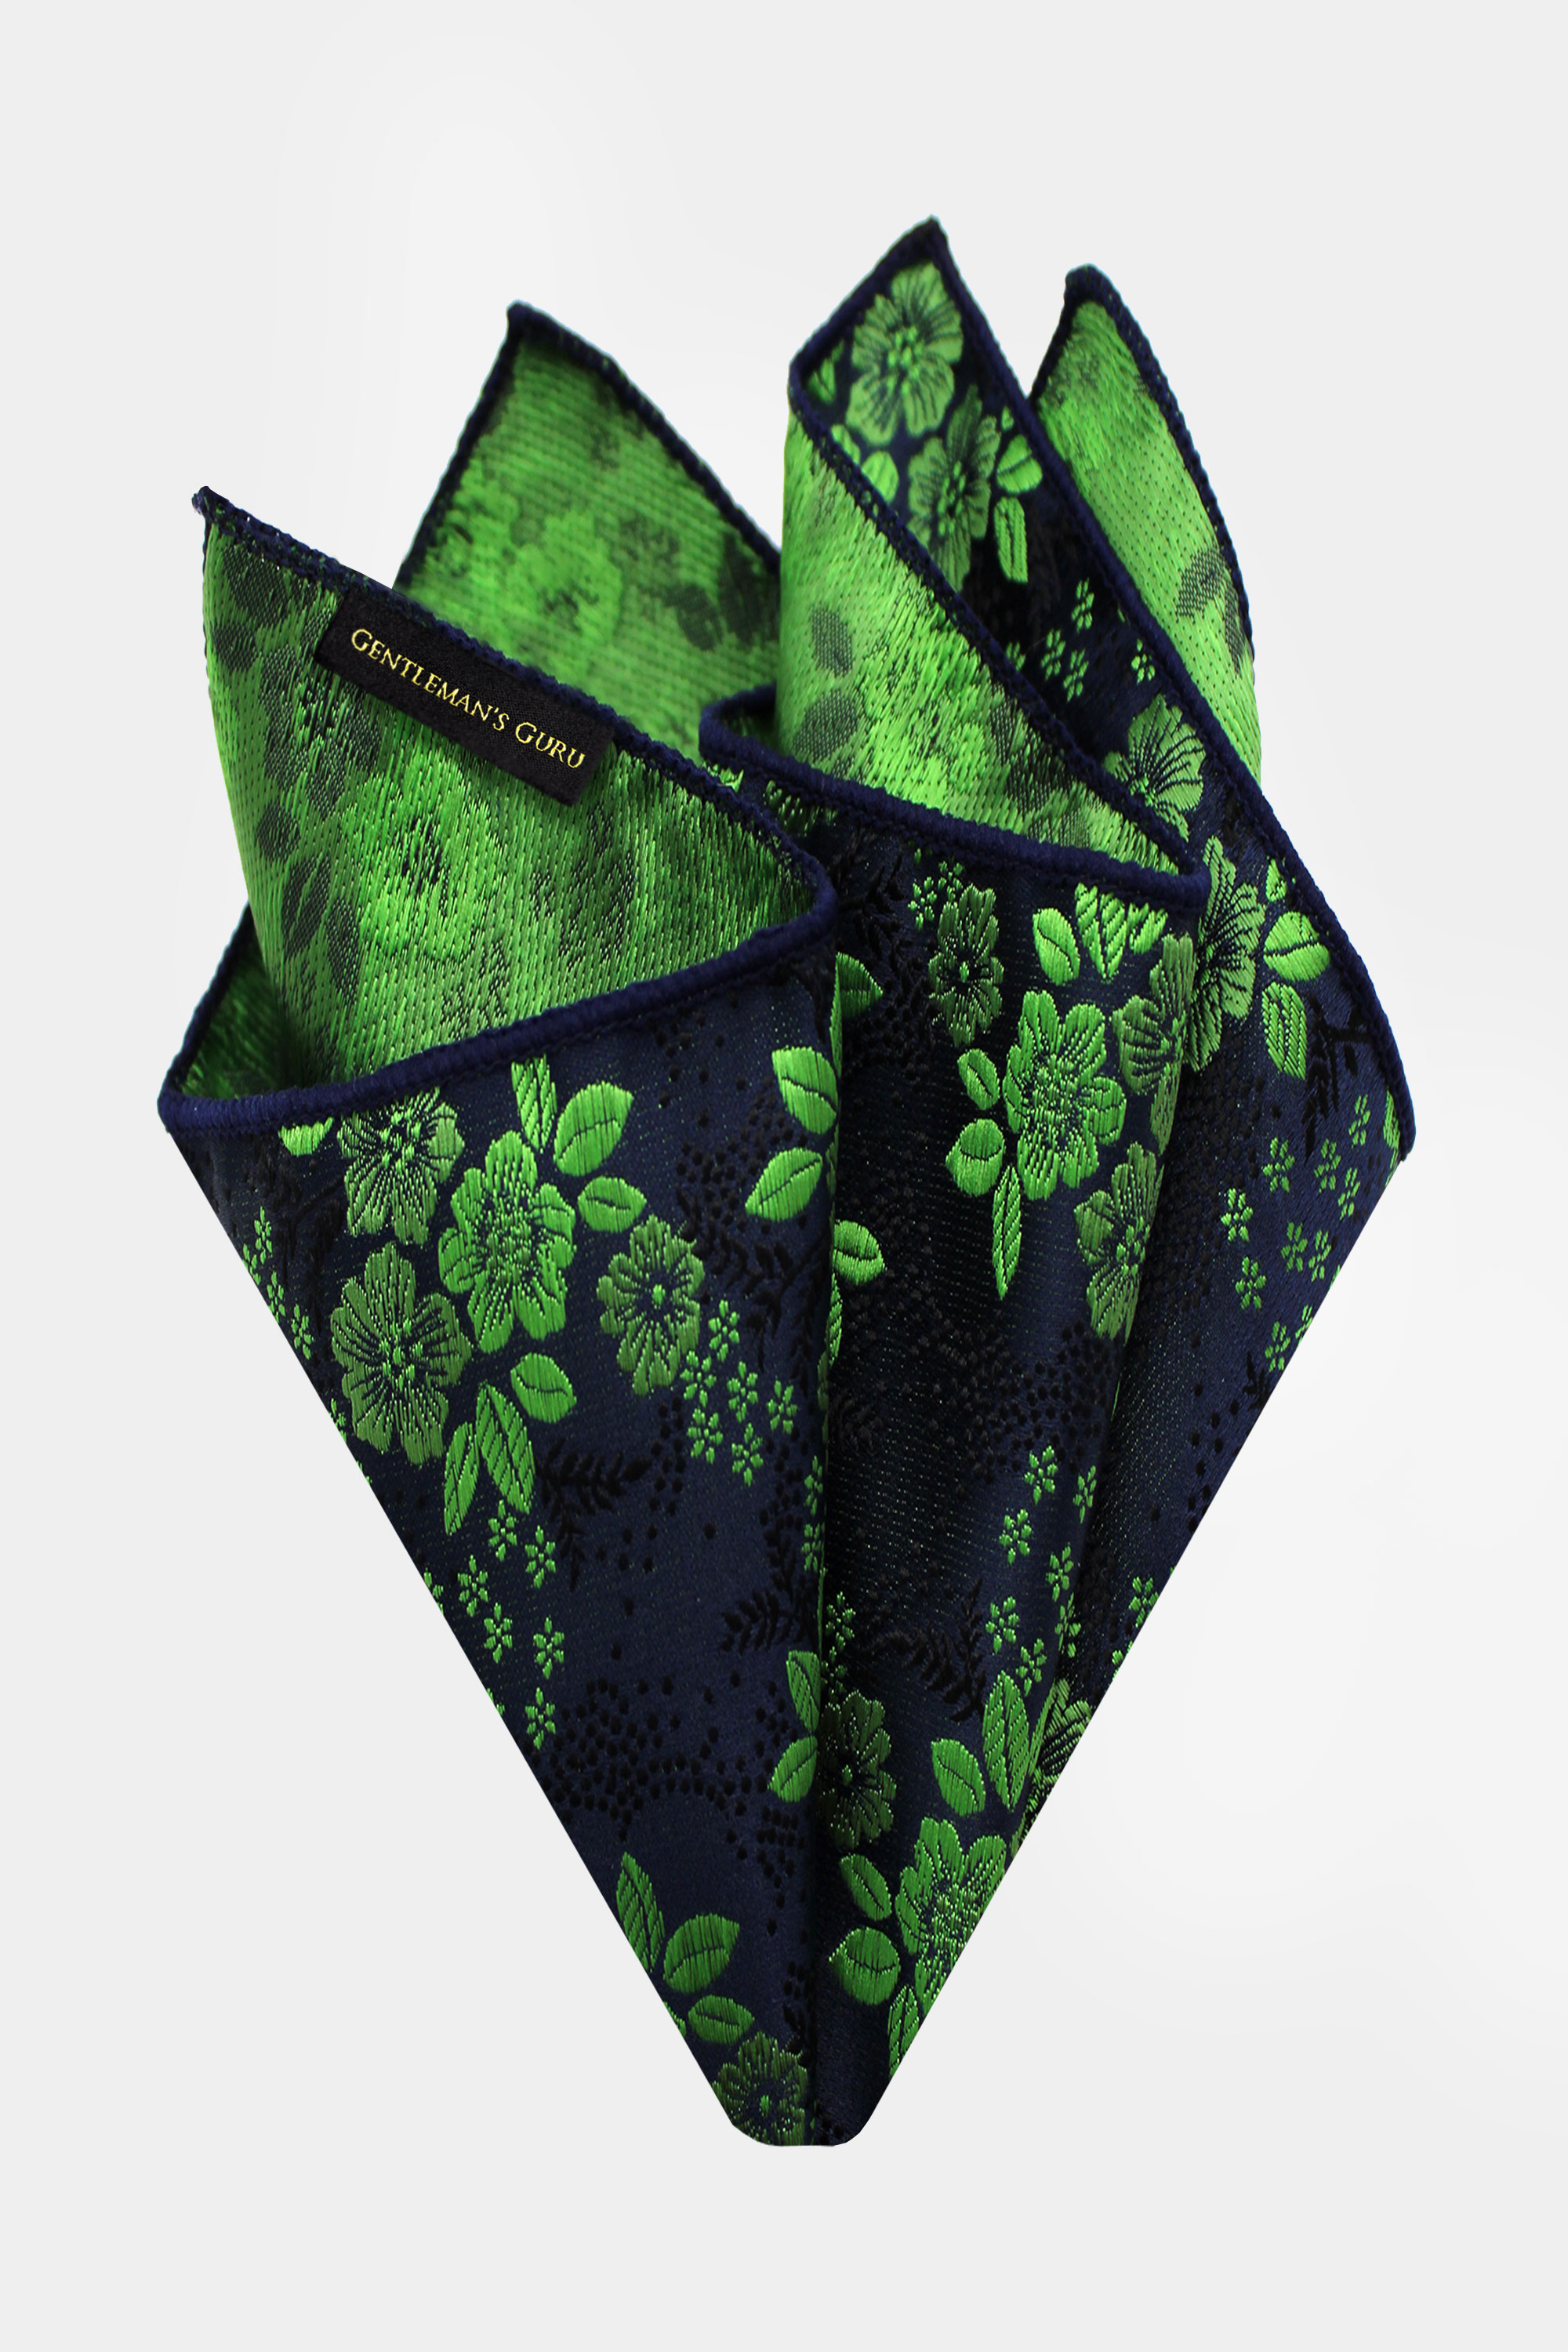 Green-Floral-Pocket-Square-Handkerchief-from-Gentlemansguru.com